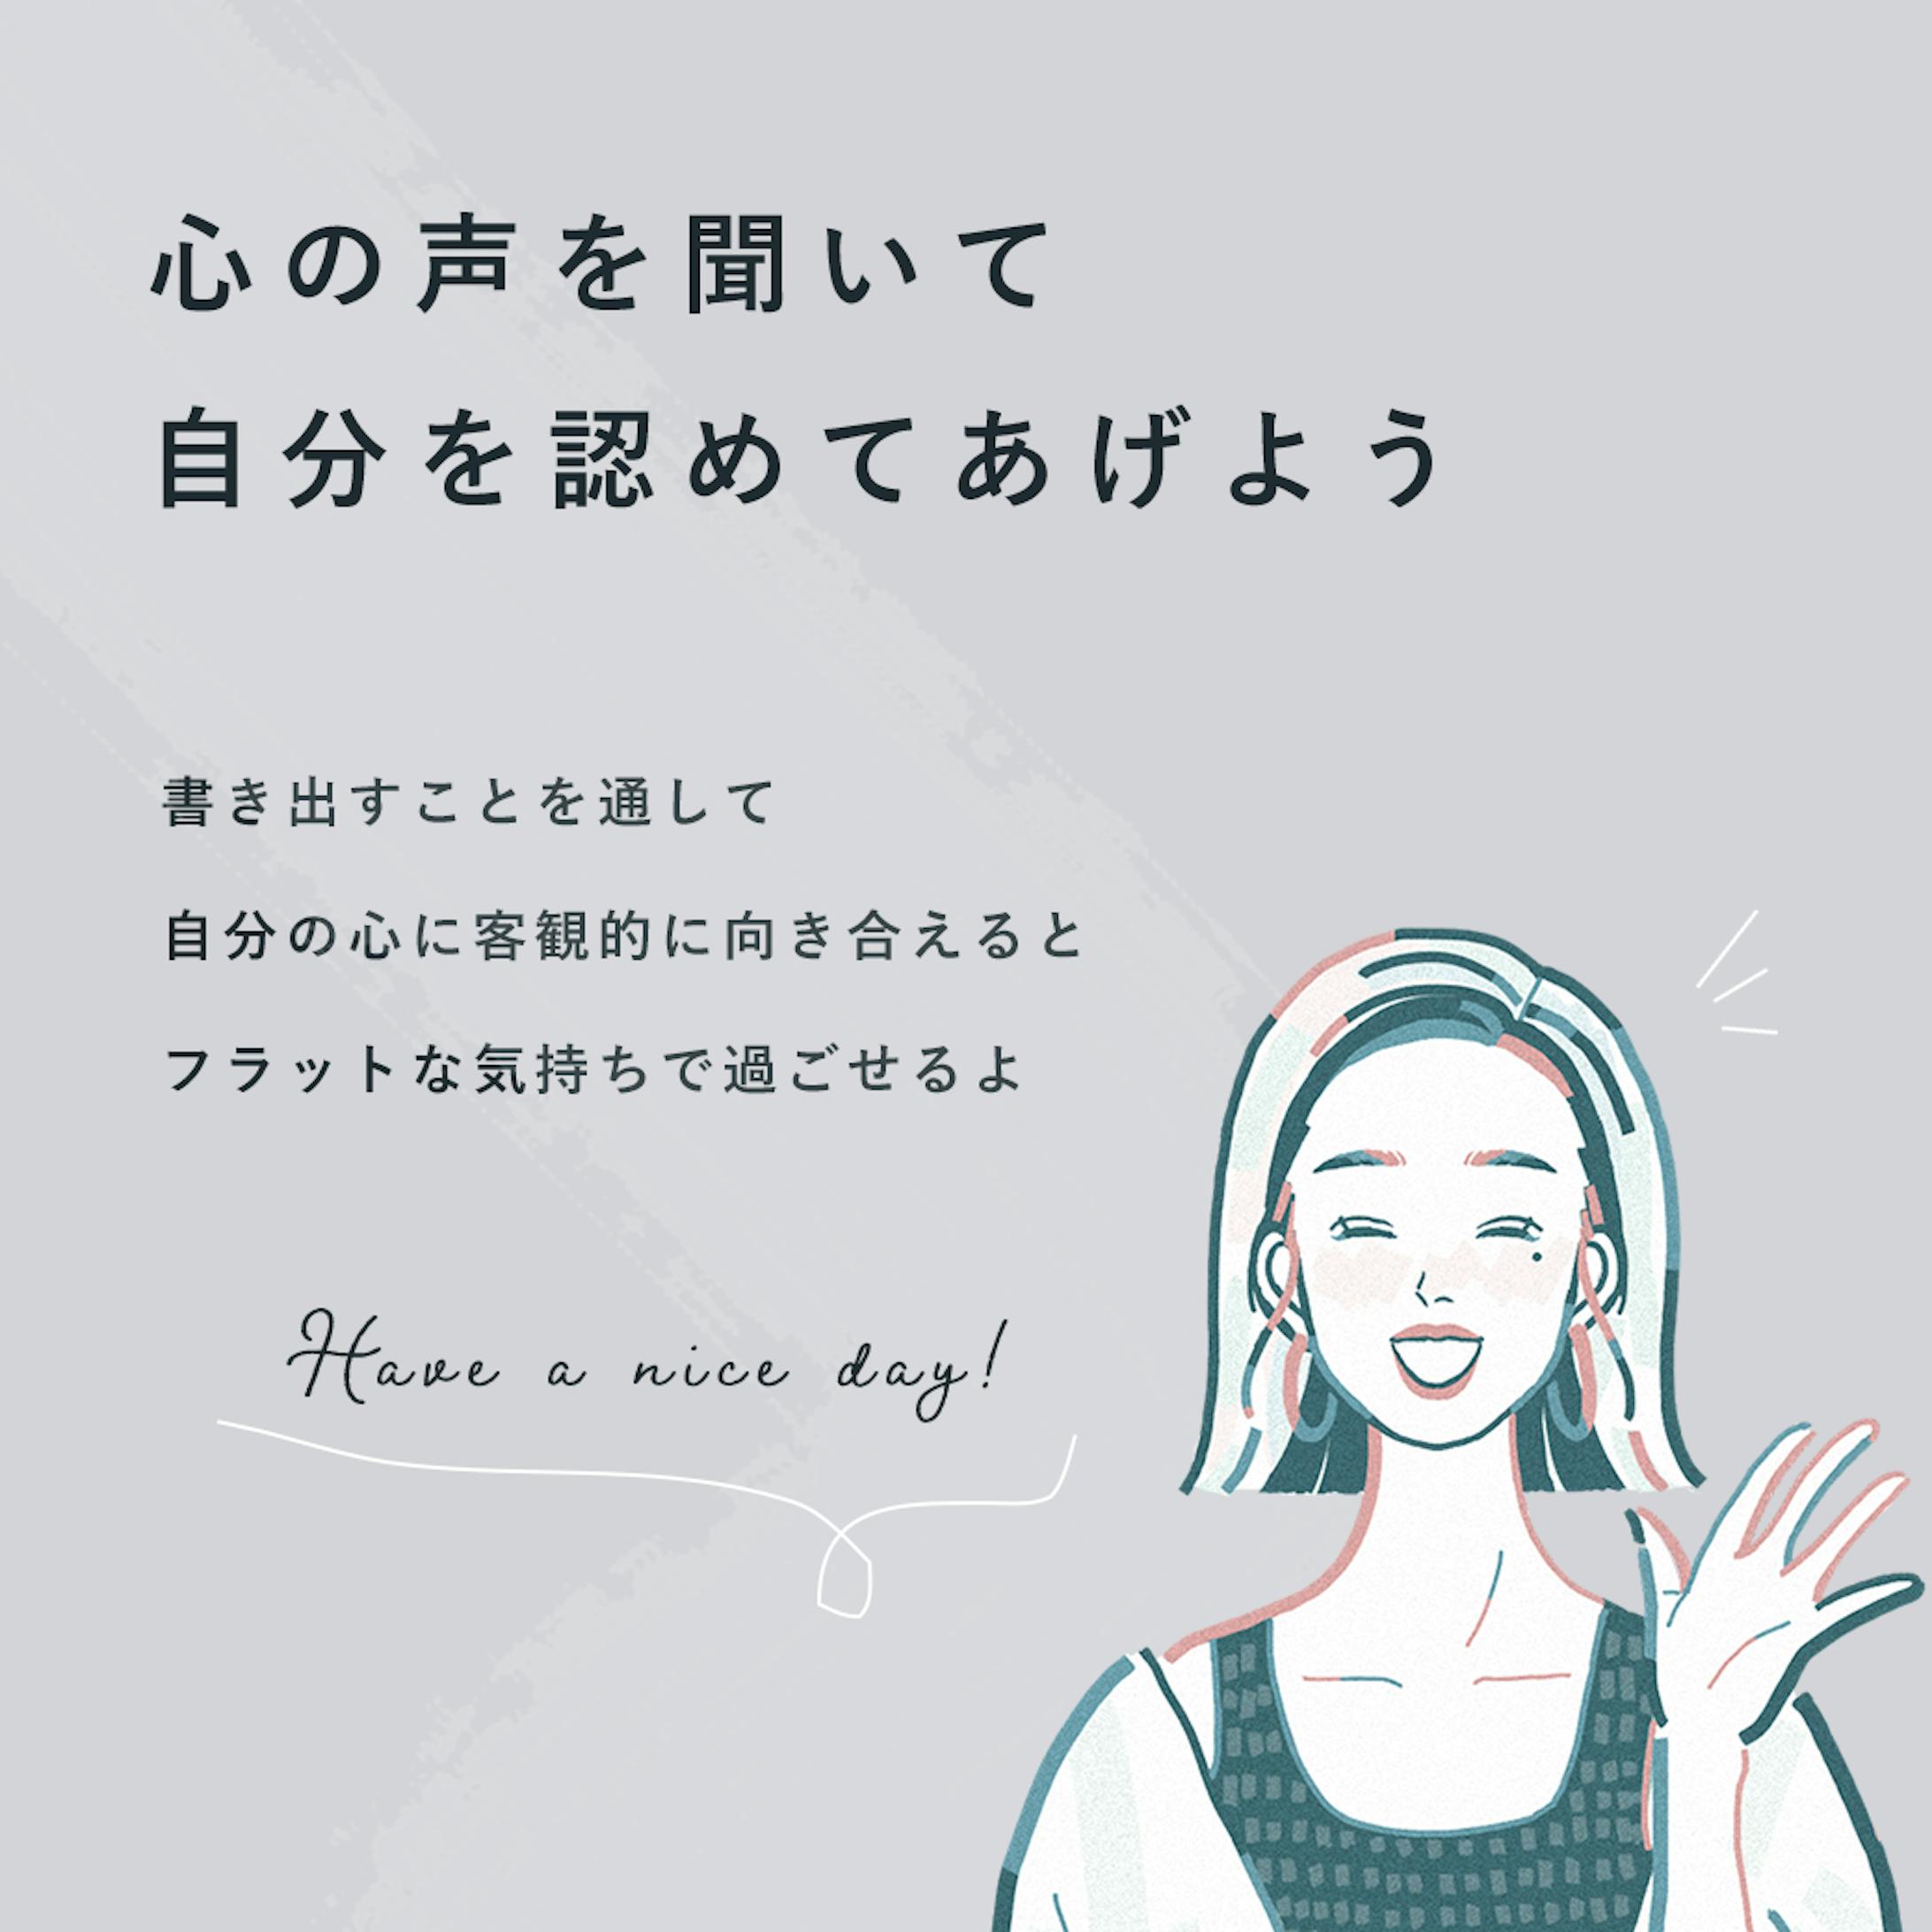 She株式会社様 instagram/Twitter用バナー-6